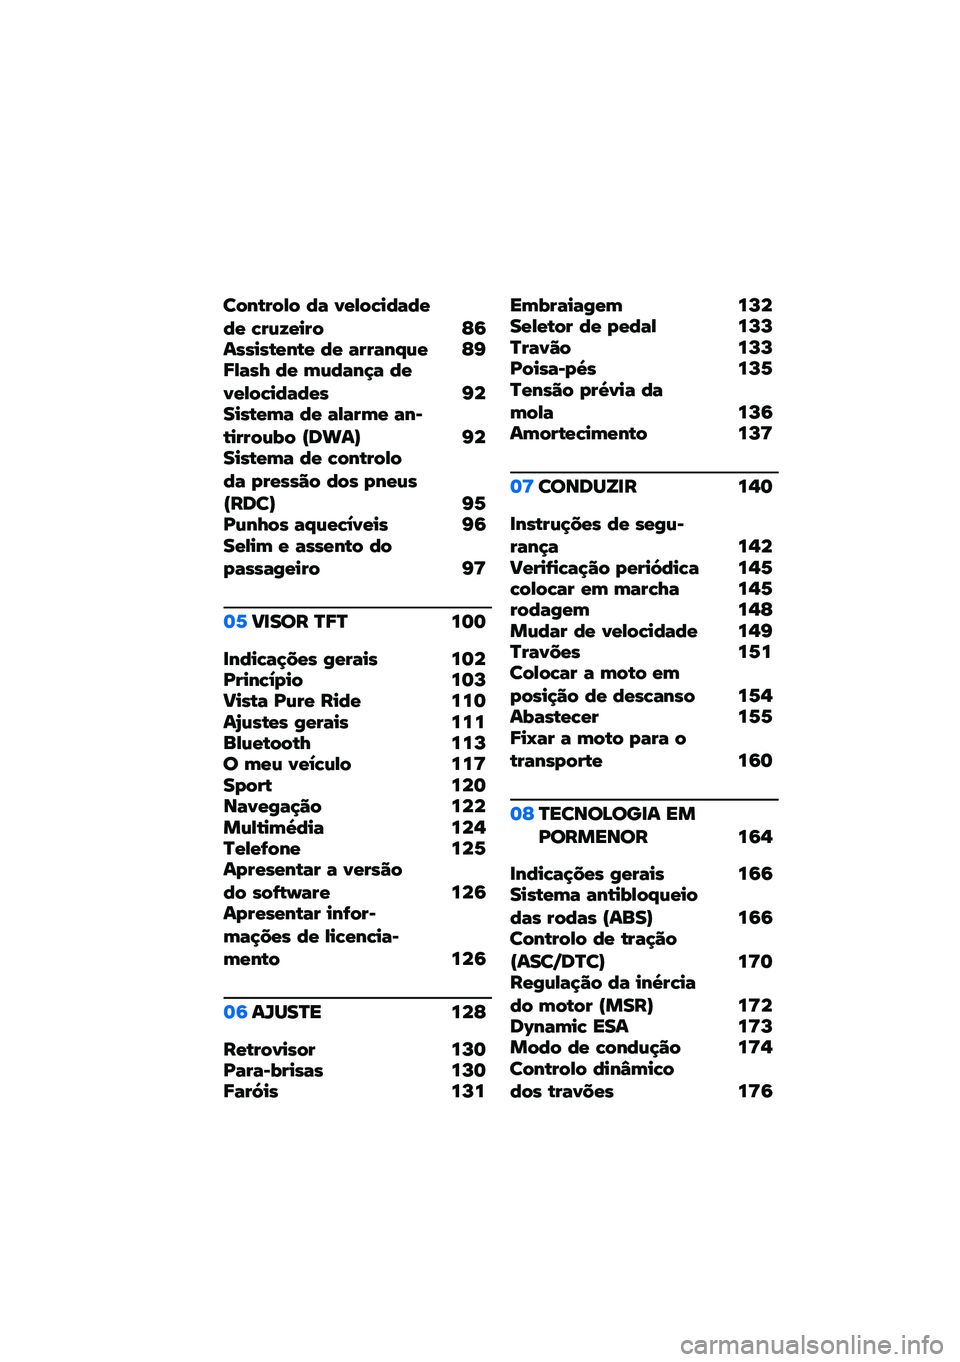 BMW MOTORRAD R 1250 RS 2021  Manual do condutor (in Portuguese) ��"��&��"�3�" �#� �/�$�3�"�%��#��#�$�#�$ �%��(��$���" �G�9��+�+��+�&�$��&�$ �#�$ ������4�(�$ �G�I�;�3��+�? �#�$ �2�(�#��� � �#�$�/�$�3�"�%��#��#�$�+ �I����+�&�$�2� �#�$ ��